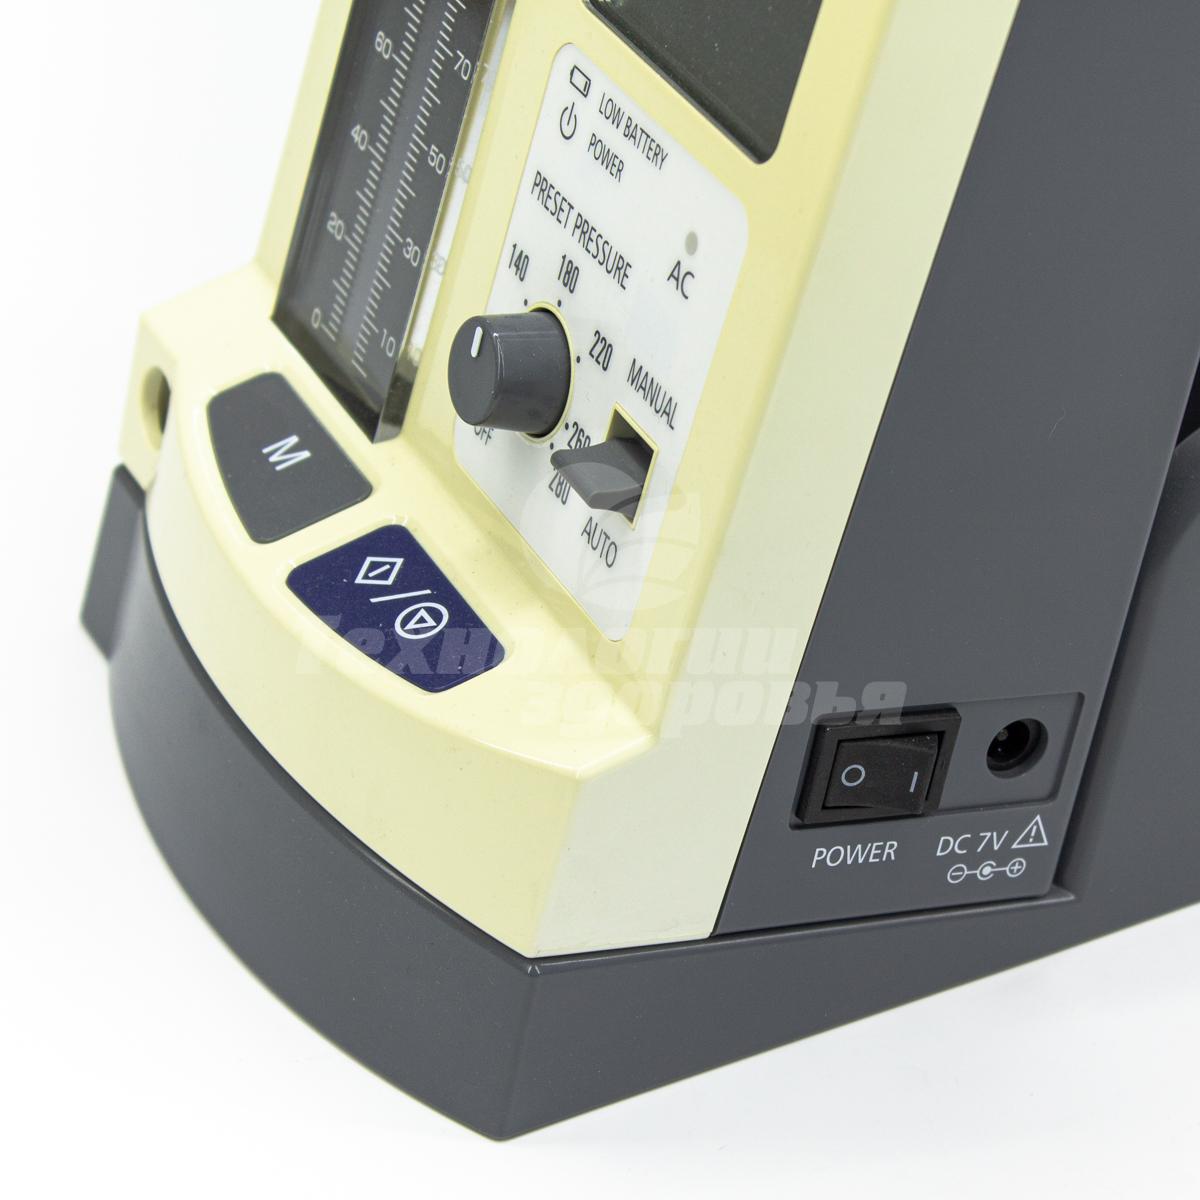 Тонометр электронный автоматический DM-3000 Nissei